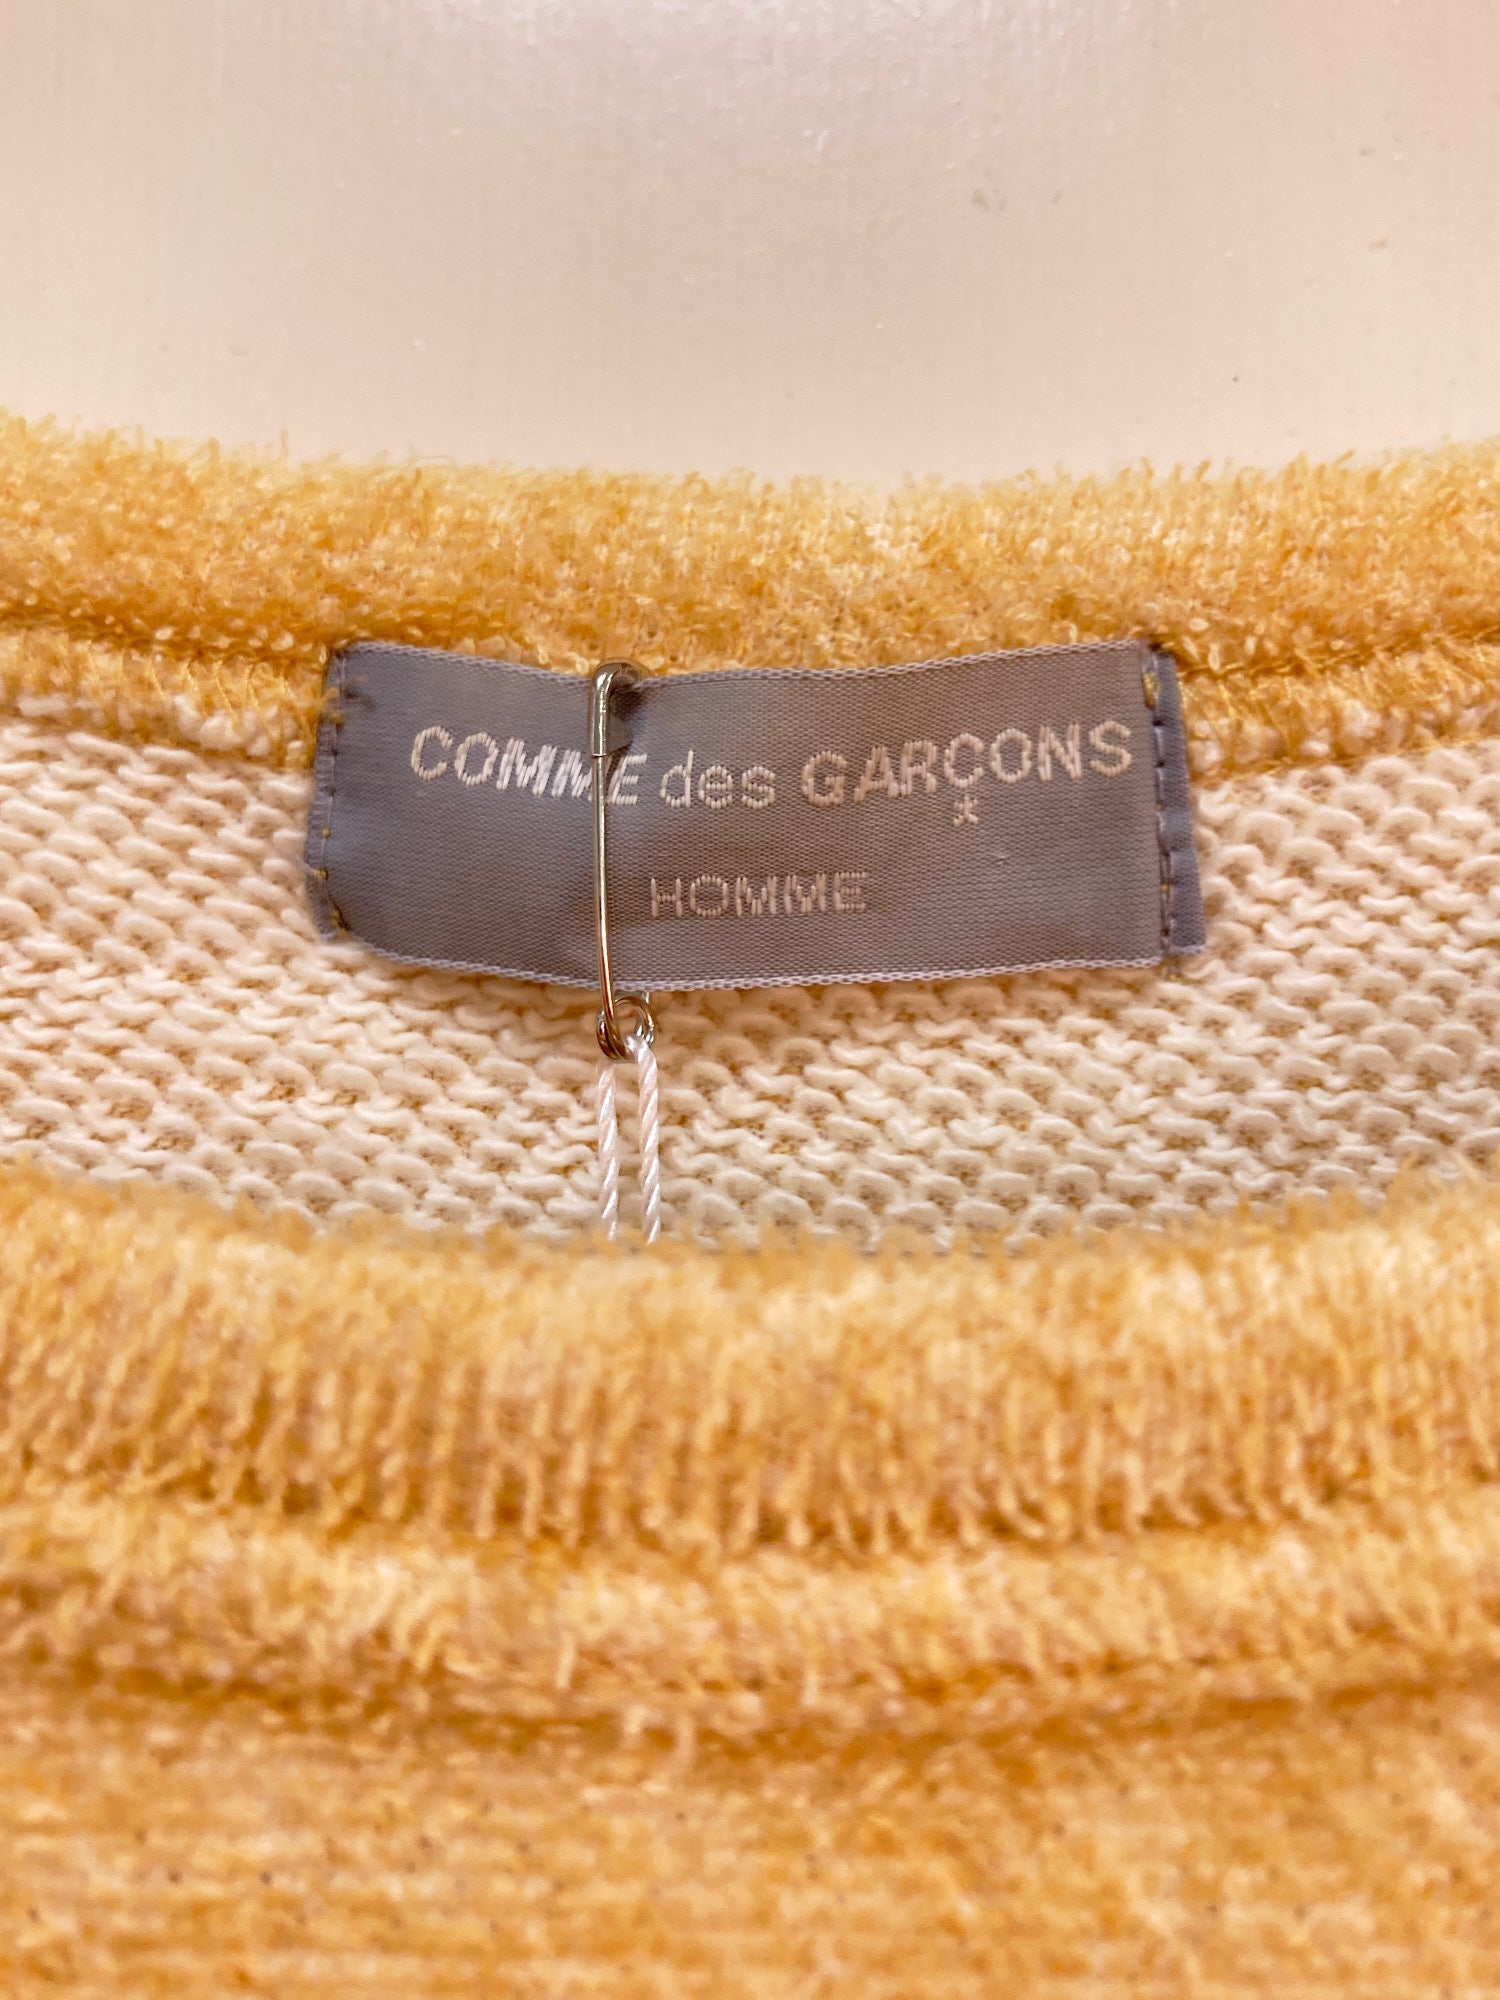 Comme des Garcons Homme 1990s sand-y yellow towelling sweatshirt - M